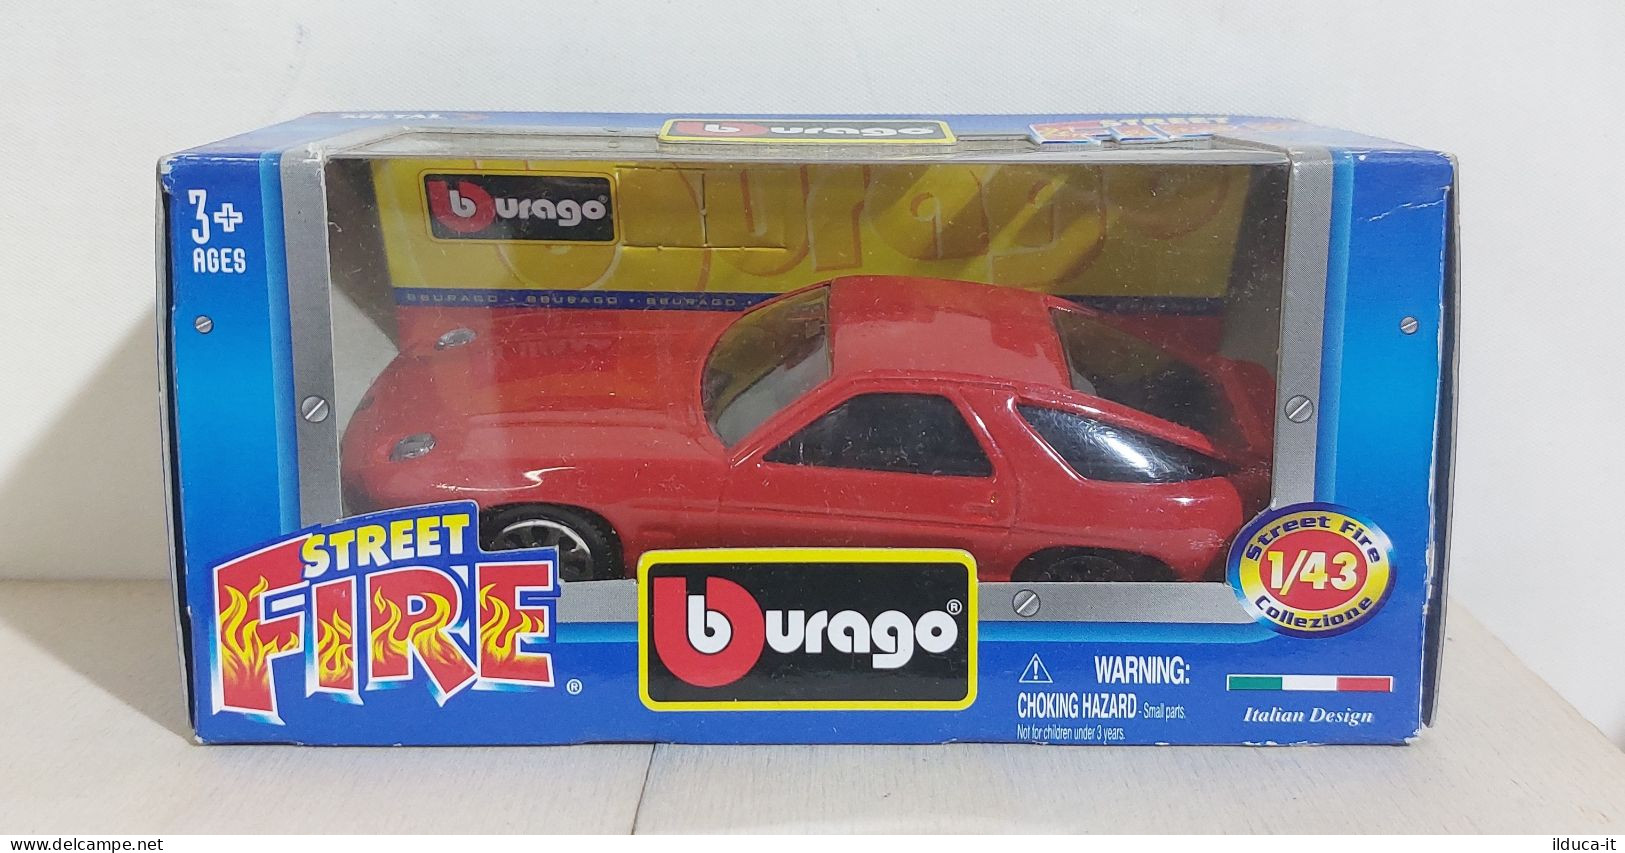 I116156 BURAGO 1/43 Serie Street Fire - Porsche 928 S4 - Box - Burago